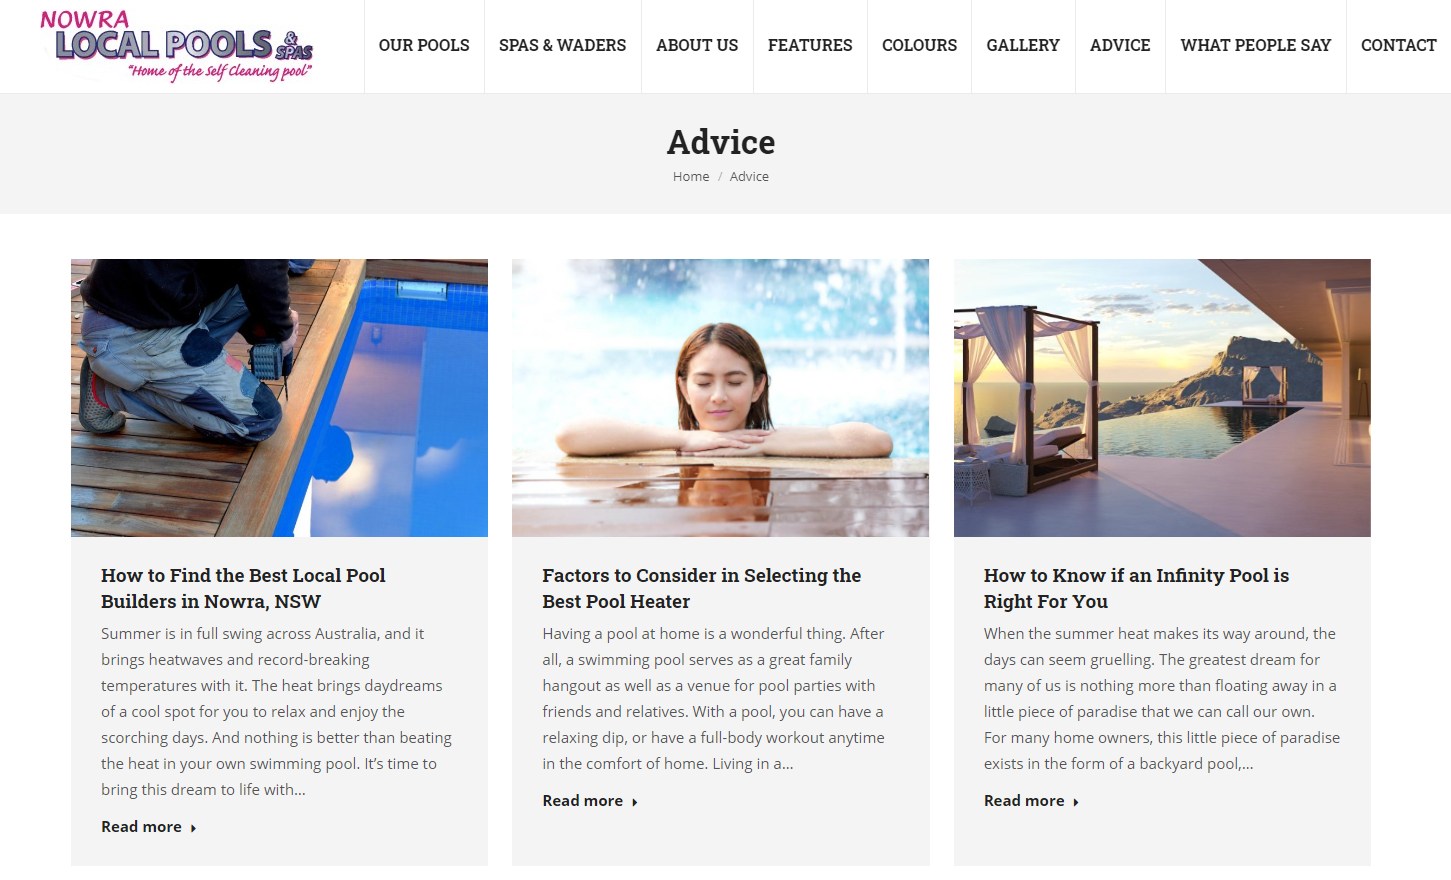 Choosing the best pool builder - comprehensive advice